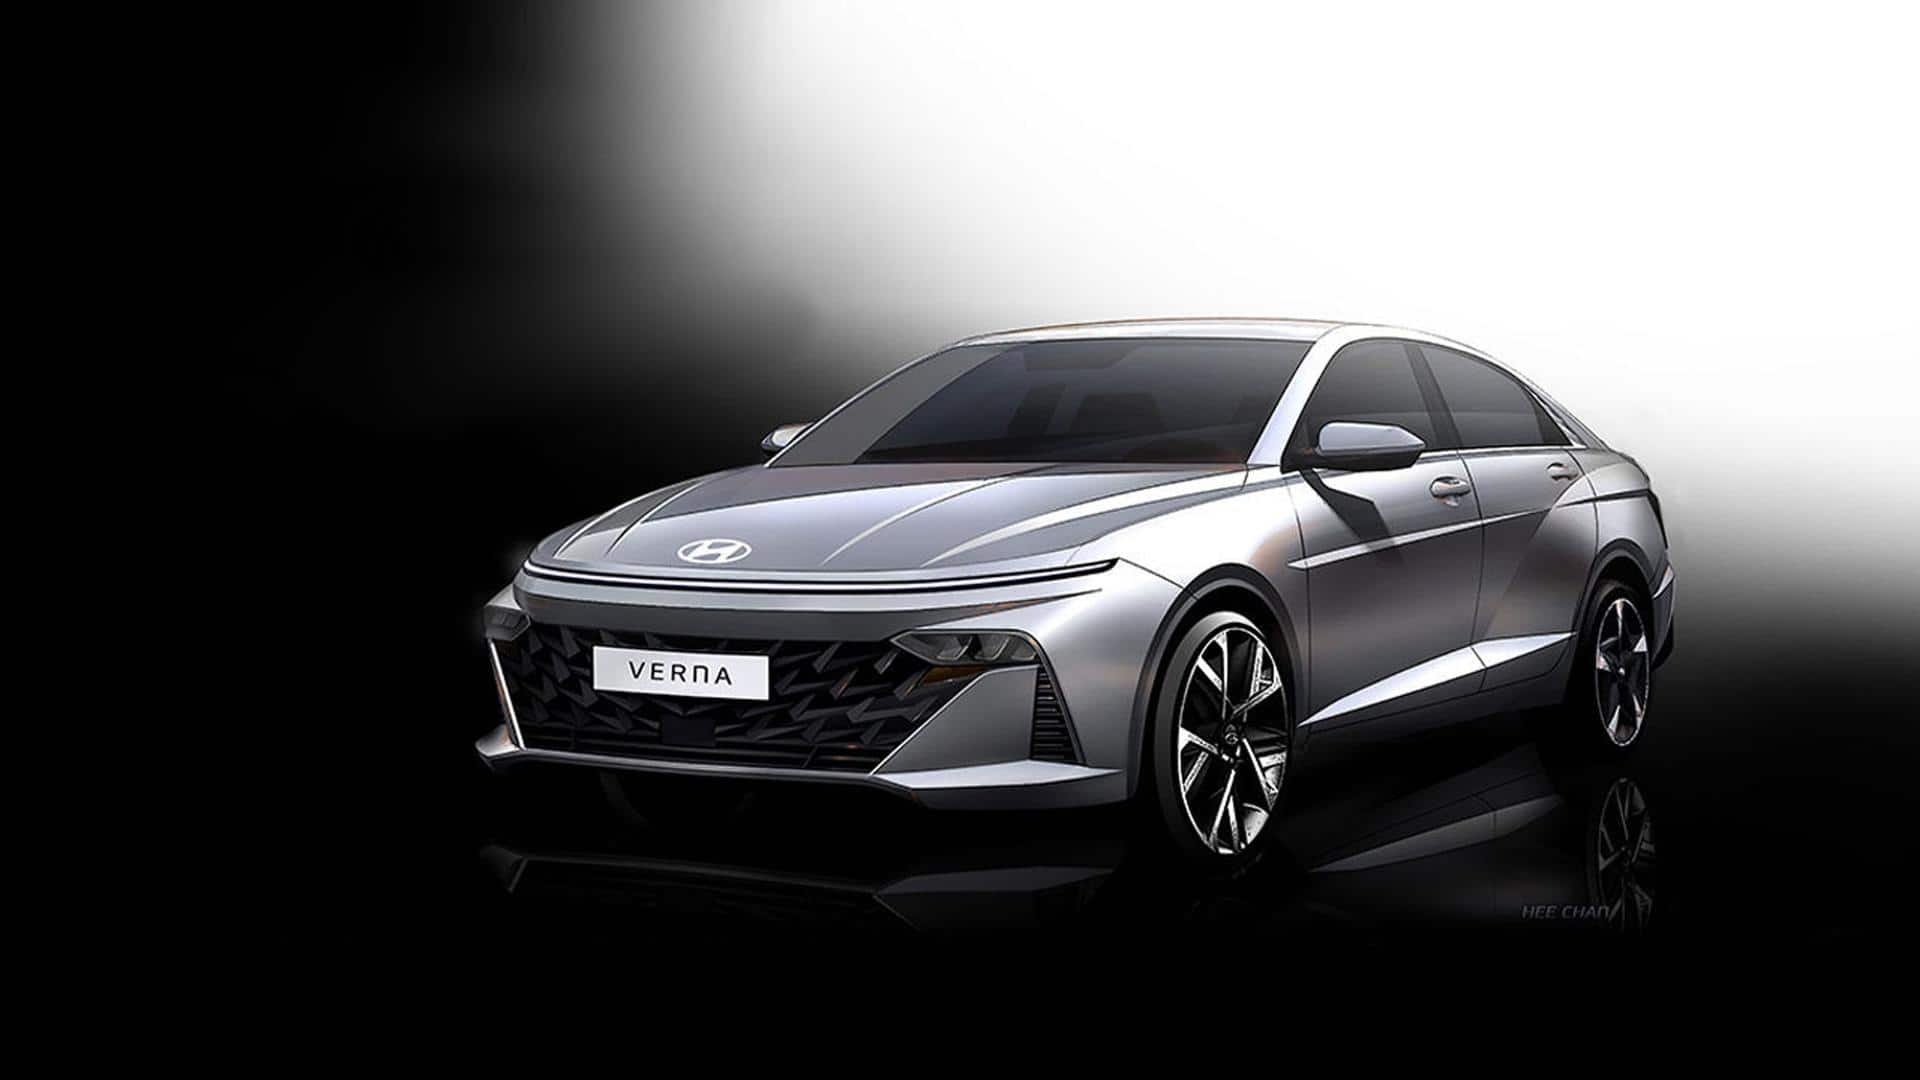 2023 Hyundai VERNA sedan teased prior to launch: Check design